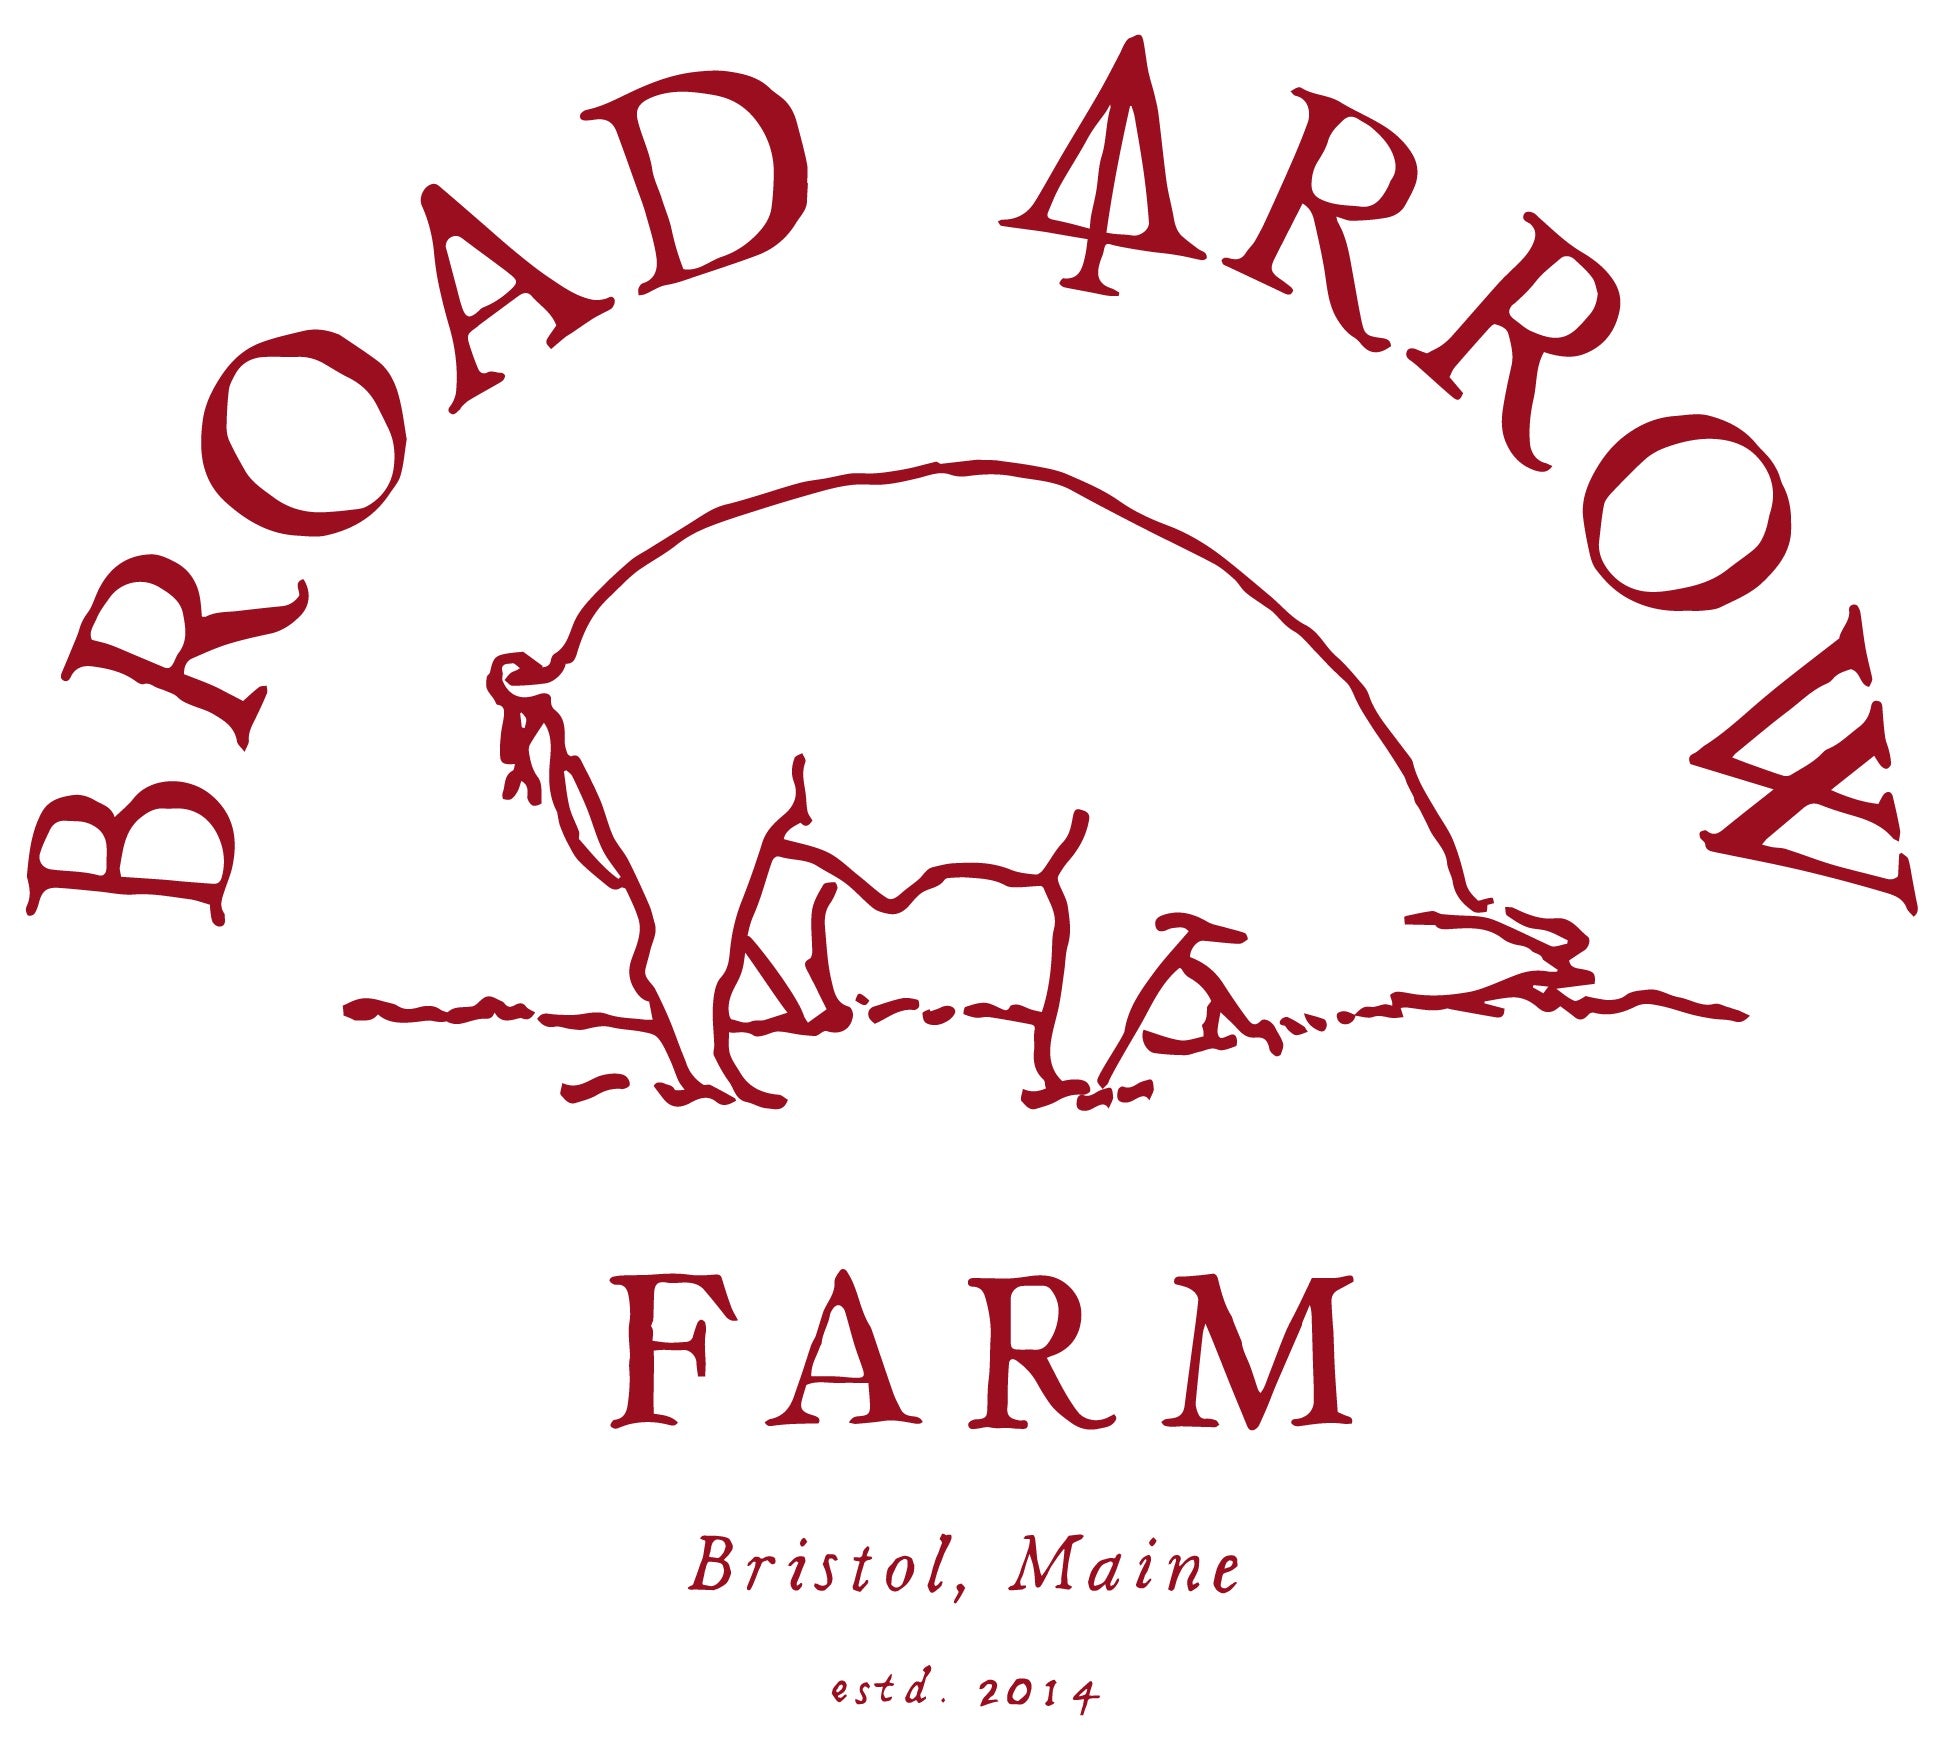 Guanciale – Broad Arrow Farm Market & Butcher